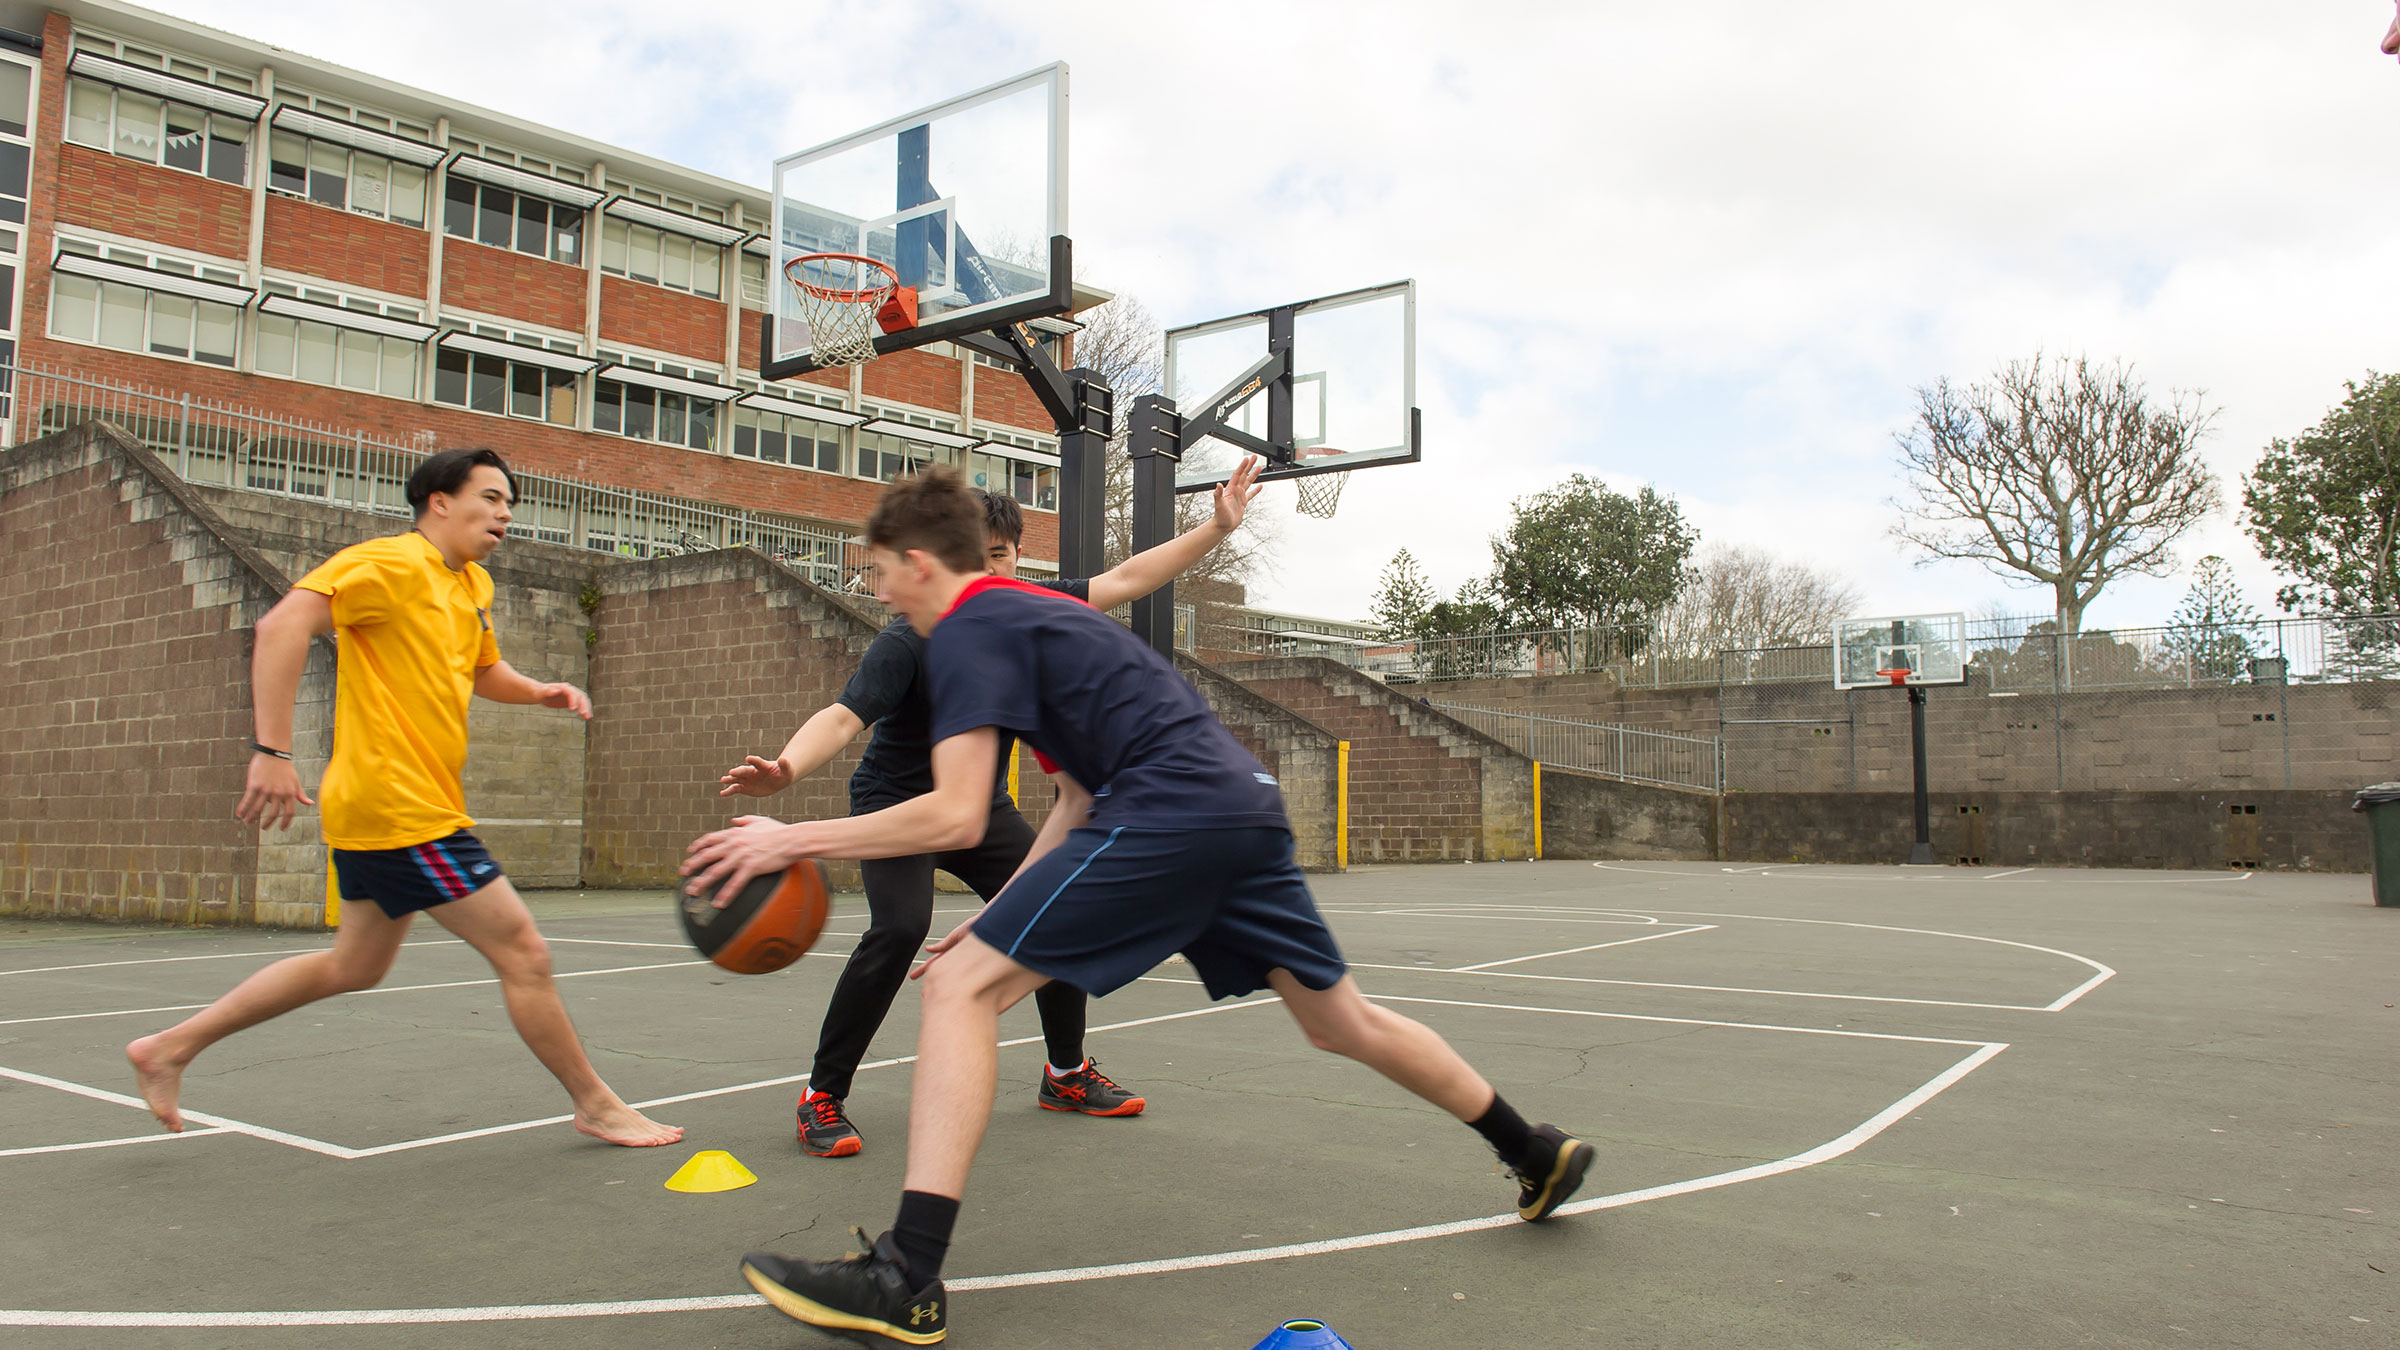 The teenage boys playing basketball on an asphalt court